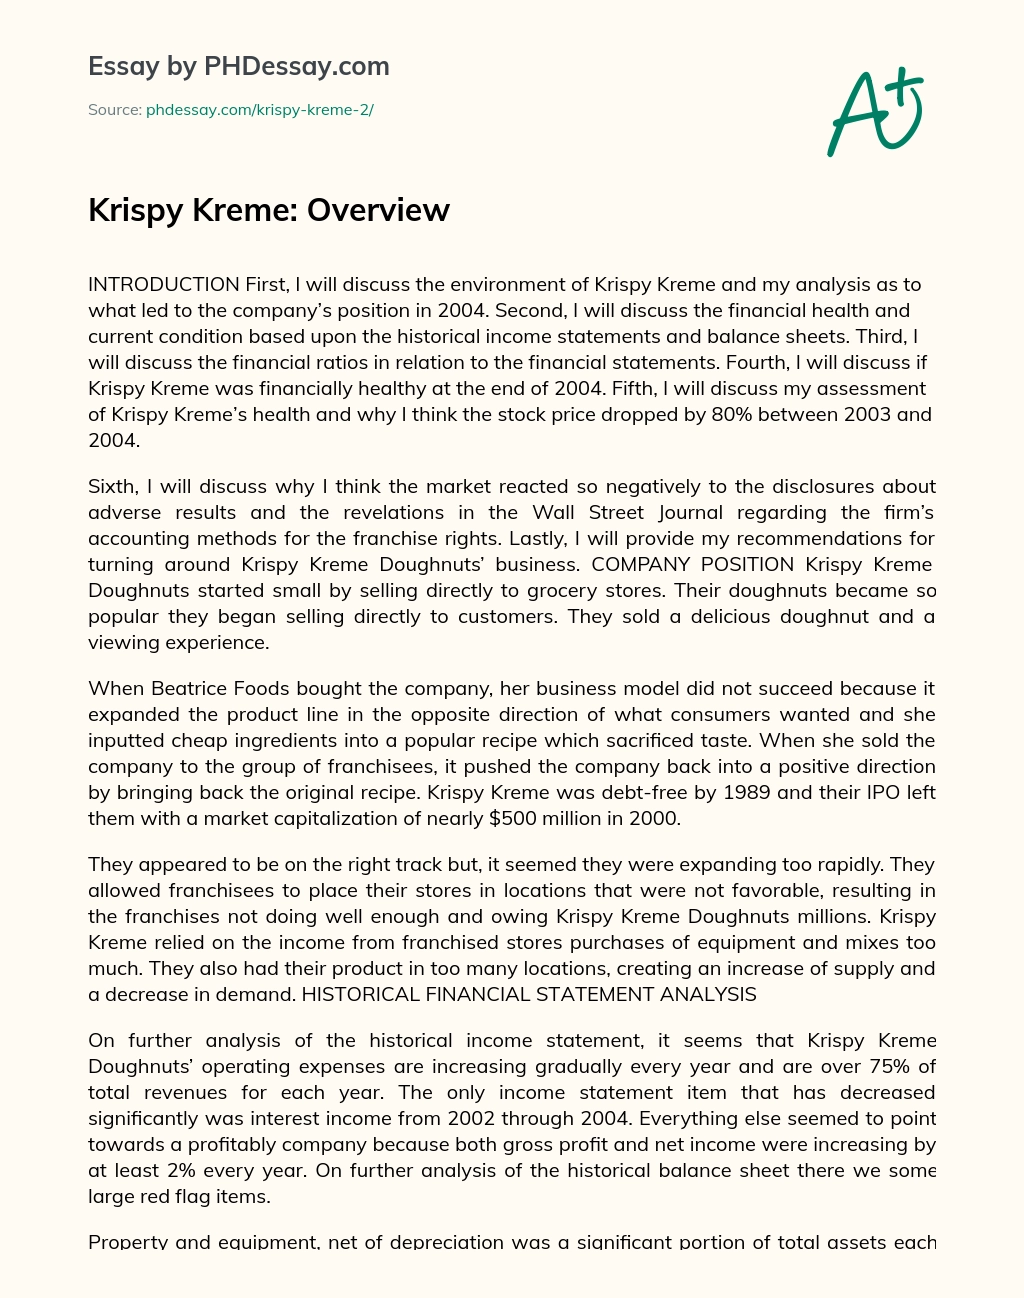 Krispy Kreme: Overview essay